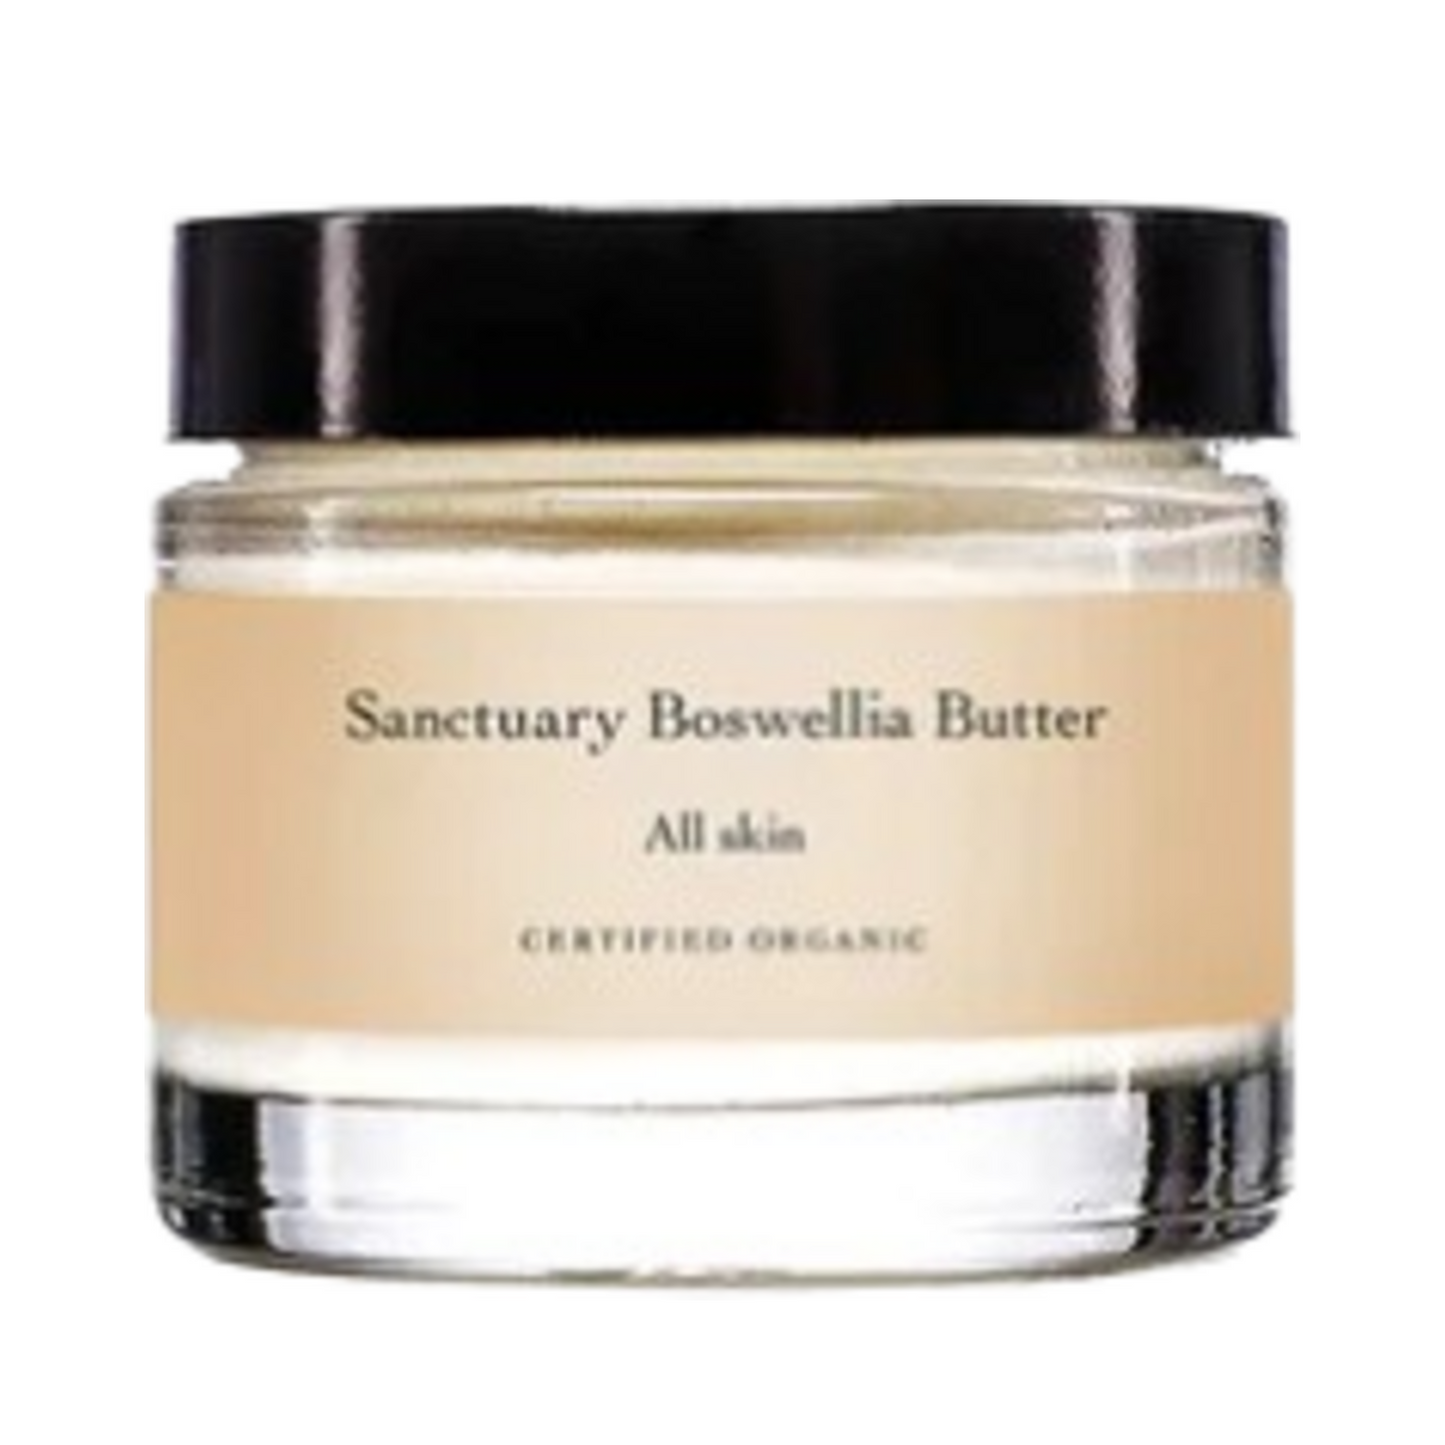 Evanhealy Sanctuary Boswellia Butter